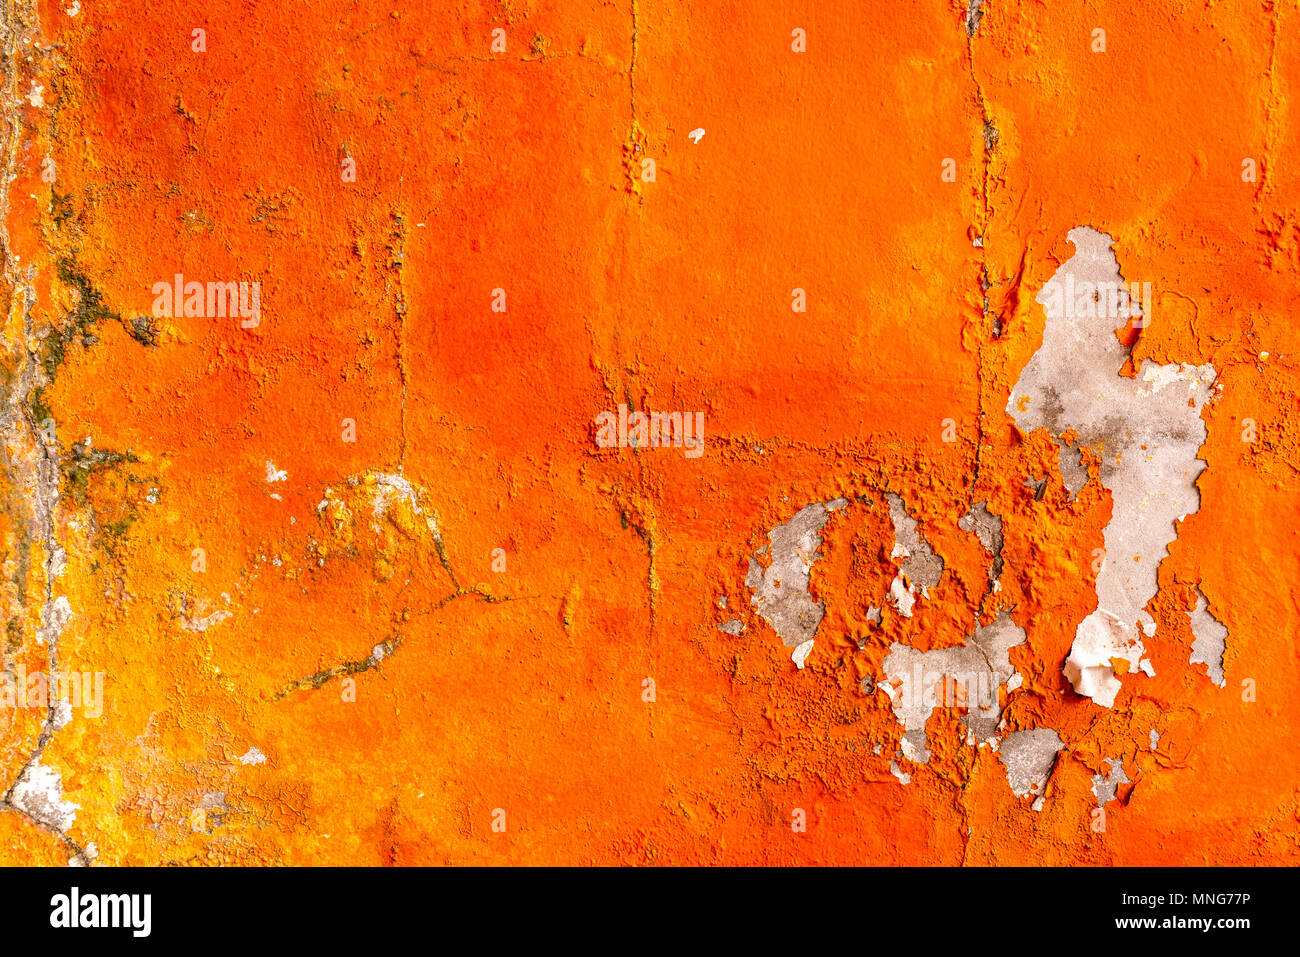 Download 73 Background Images Of Orange Color Terbaik